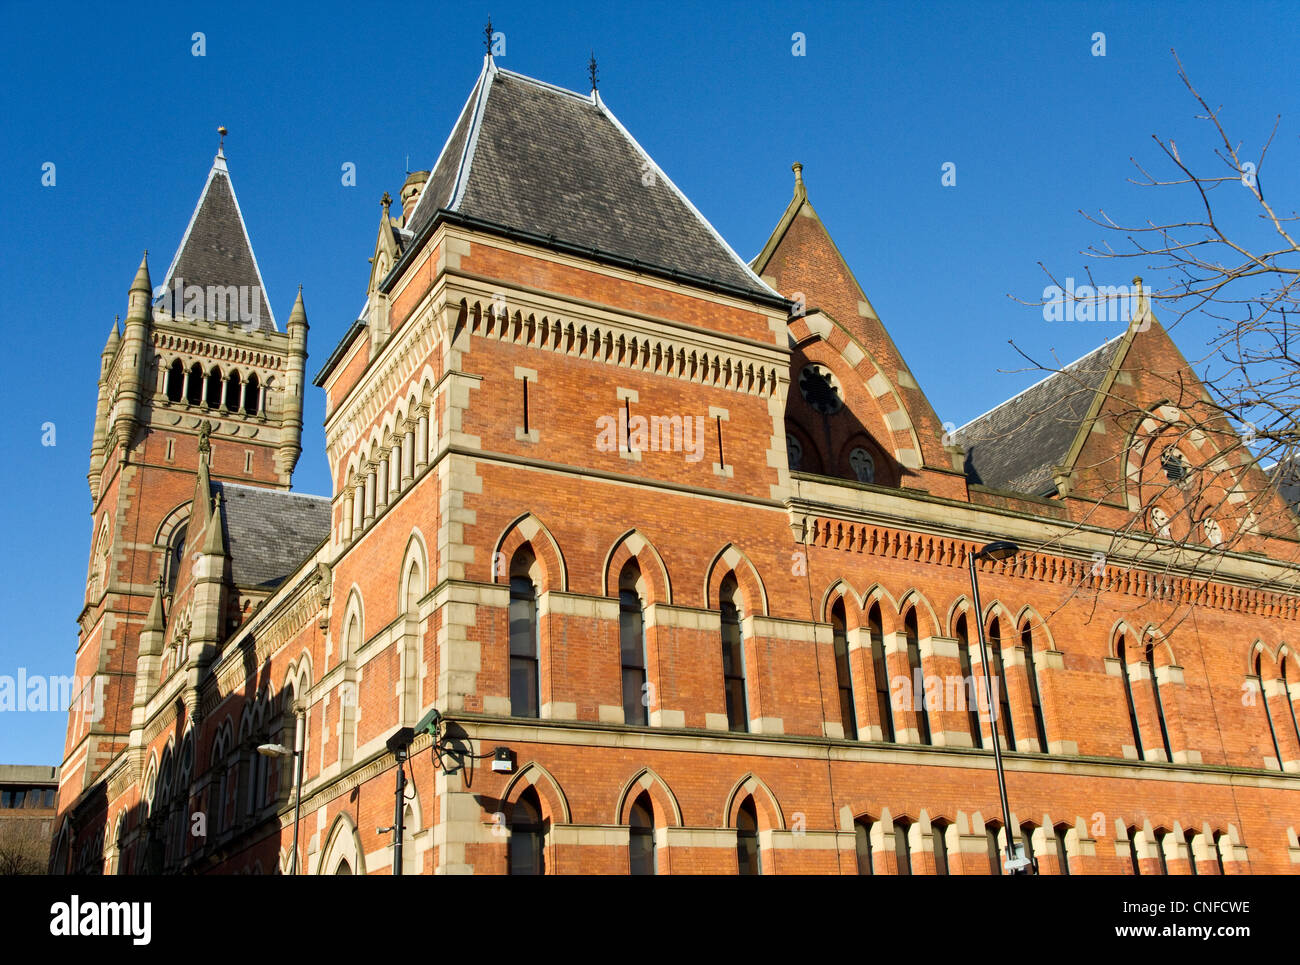 Minshull Street Crown Court building, designed by Thomas Worthington, built 1867-1873, Minshull St, Manchester, England, UK Stock Photo